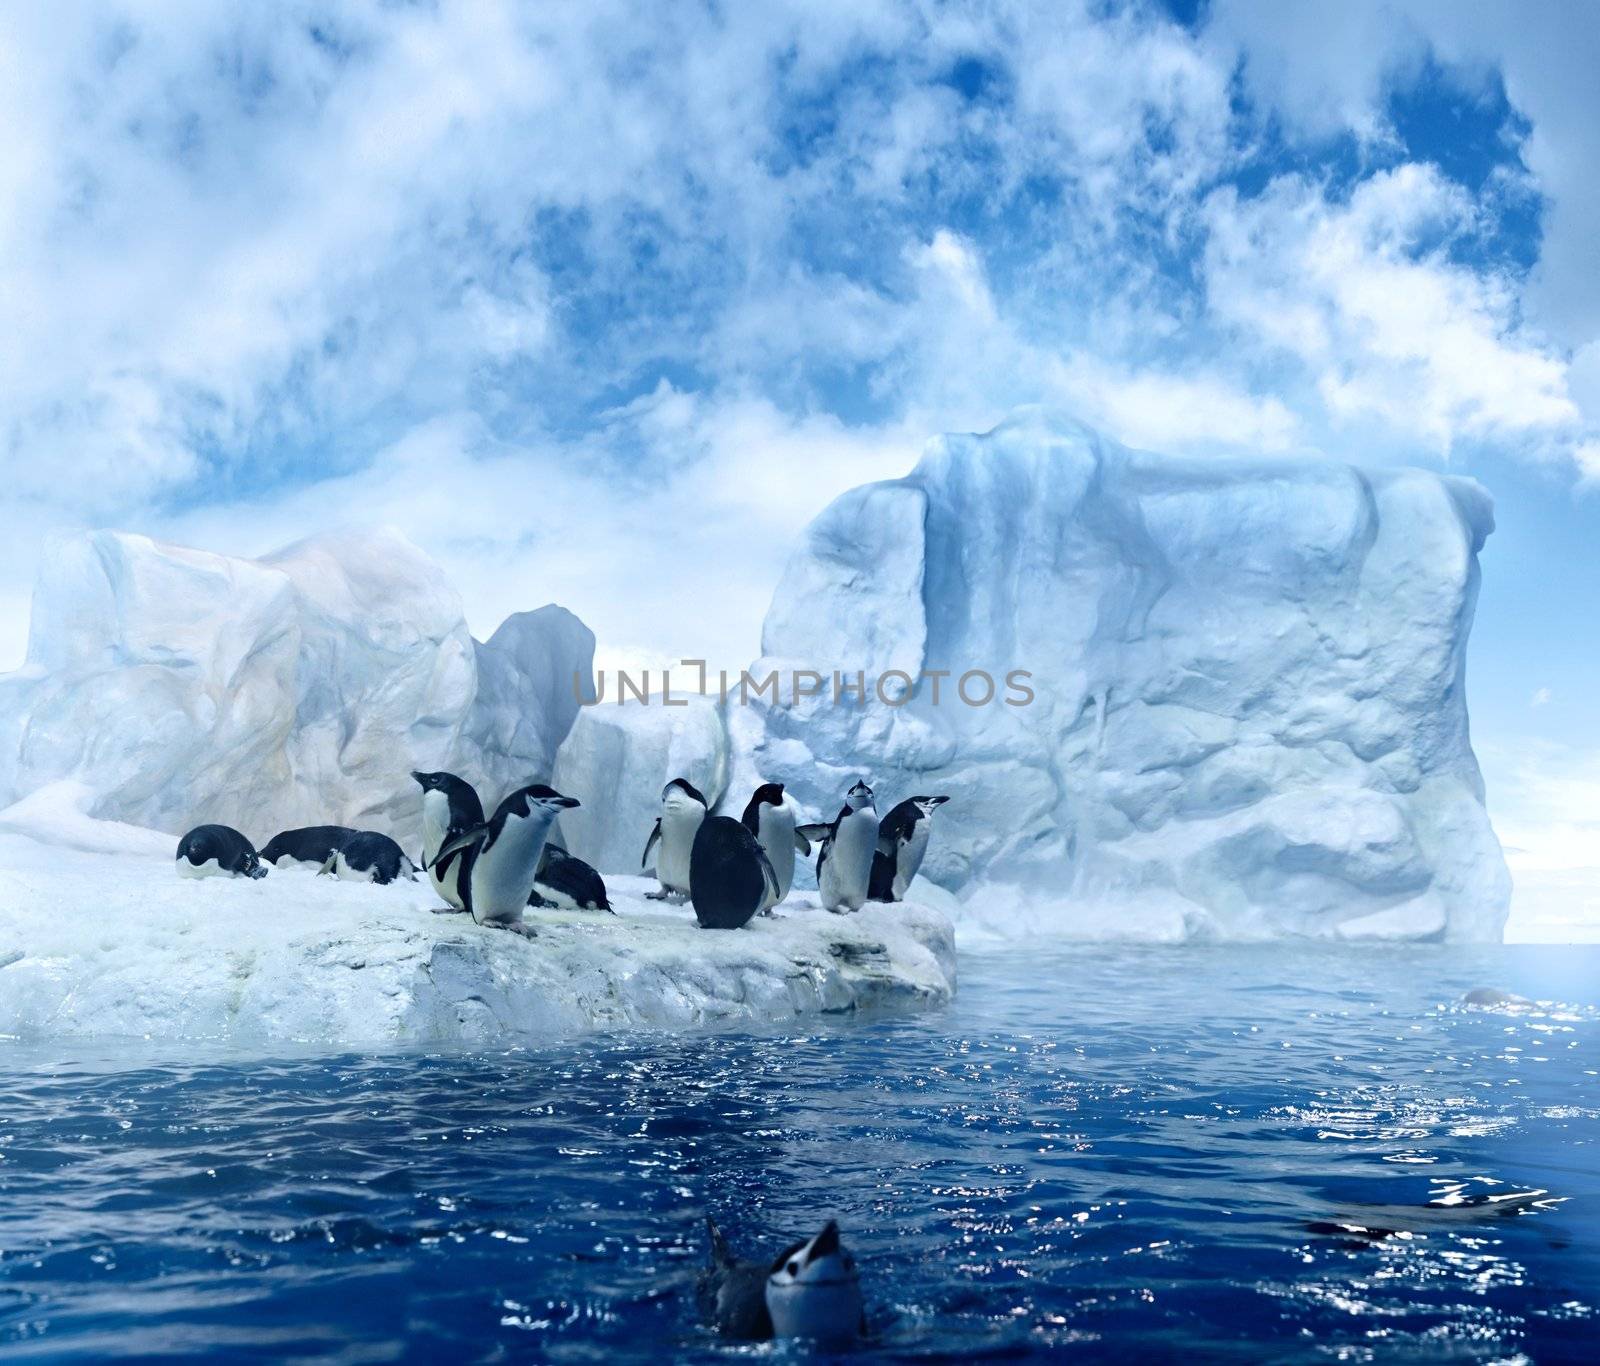 Penguins on ice floe by filmstroem